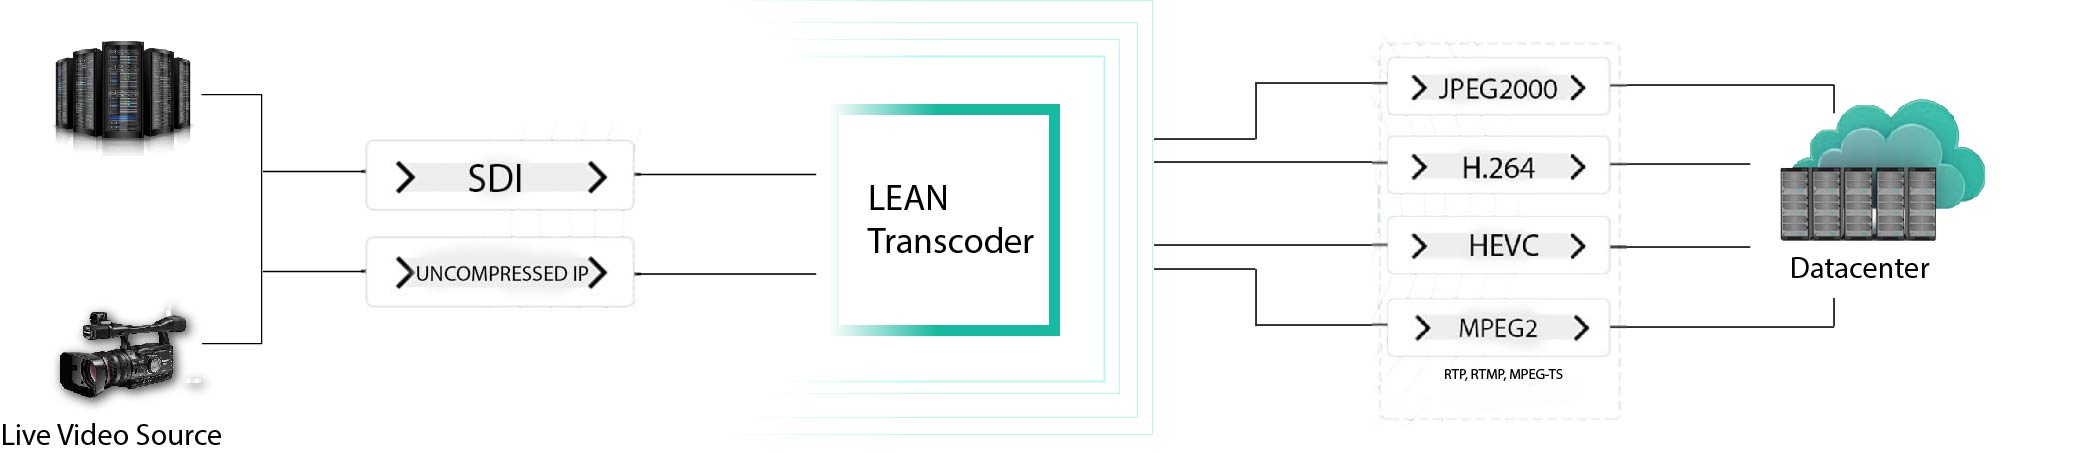 Lean Transcoder